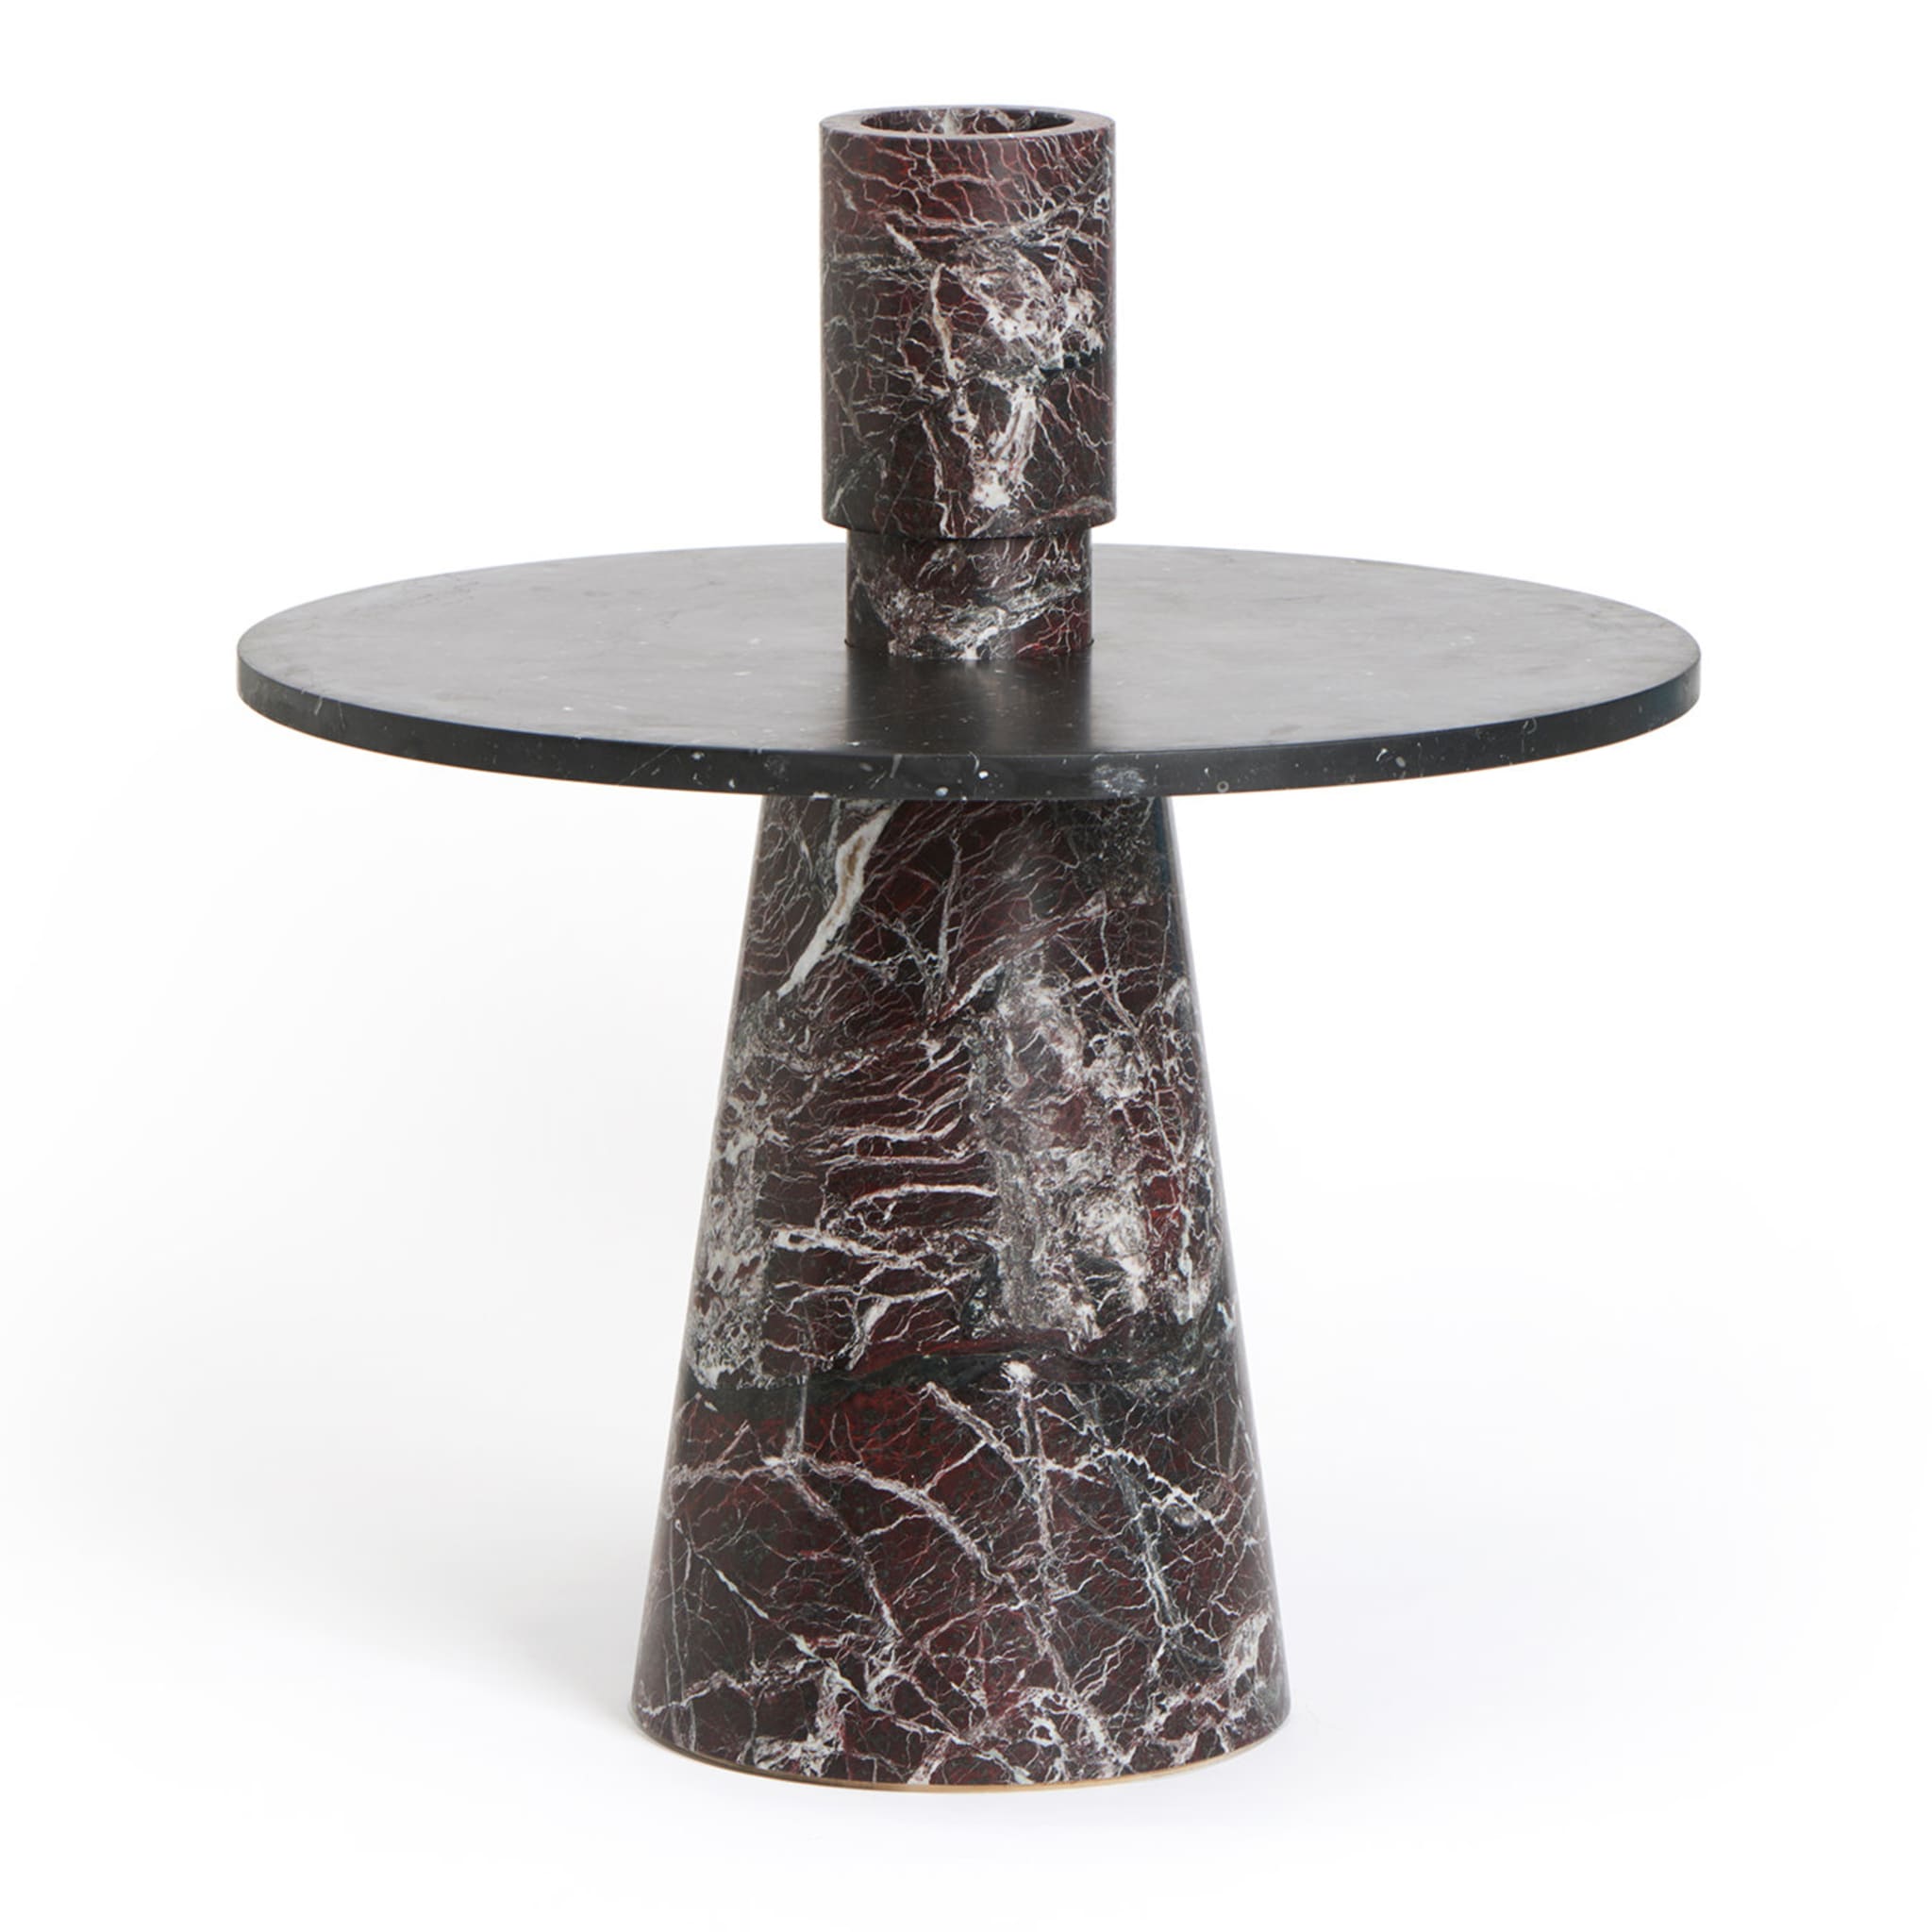 Inside Out Red/Black Marble Coffee Table by Karen Chekerdjian #1 - Alternative view 3